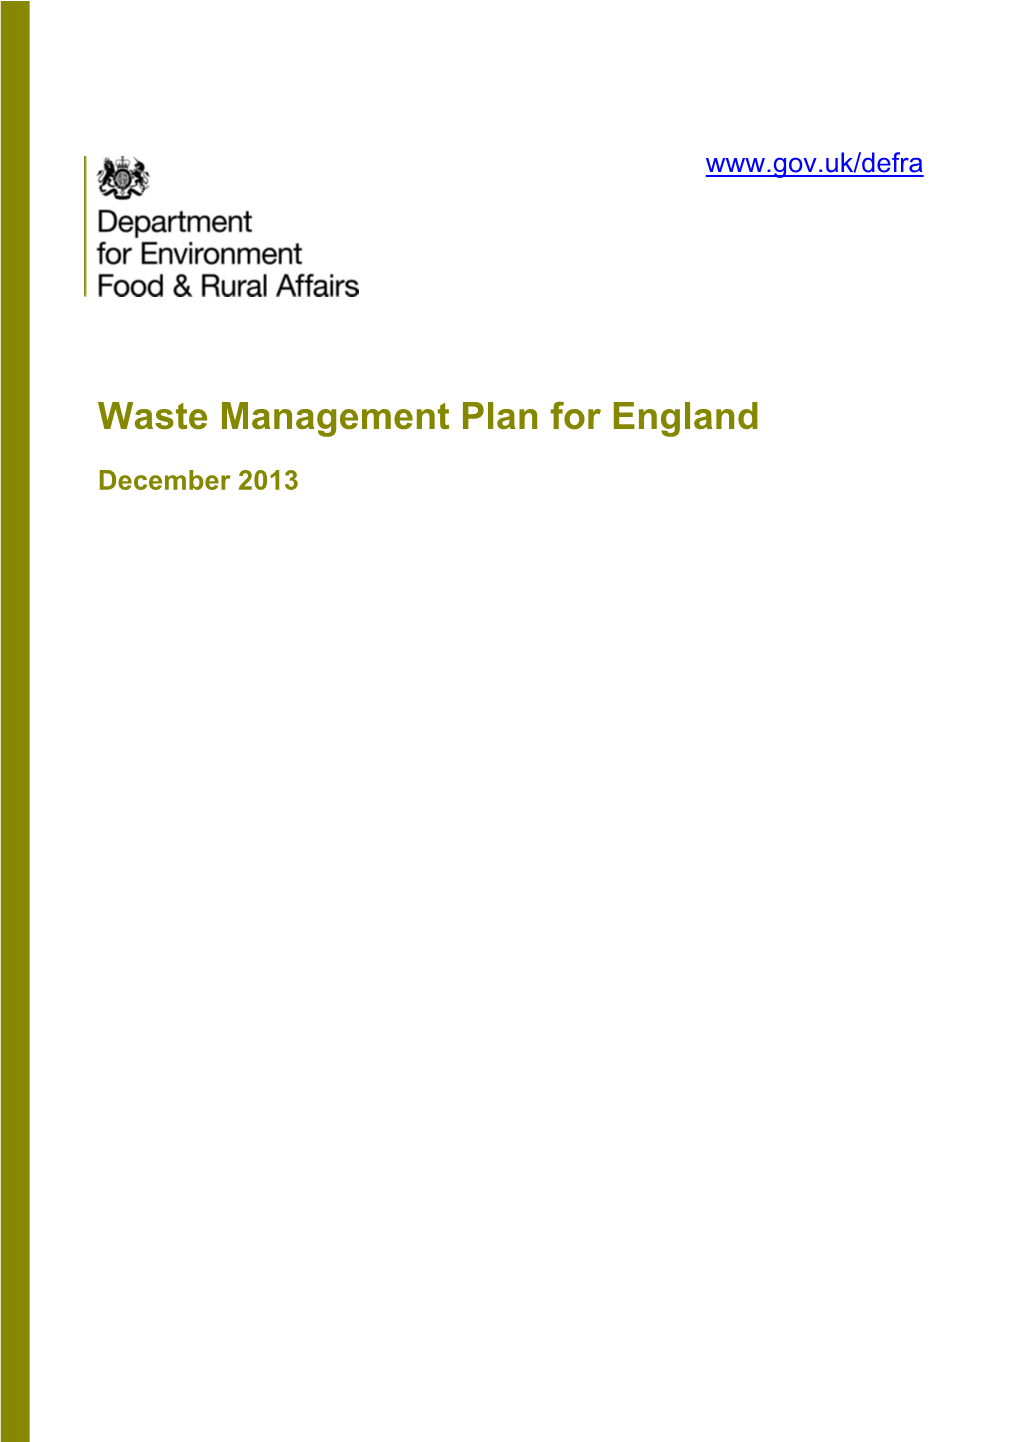 Waste Management Plan for England